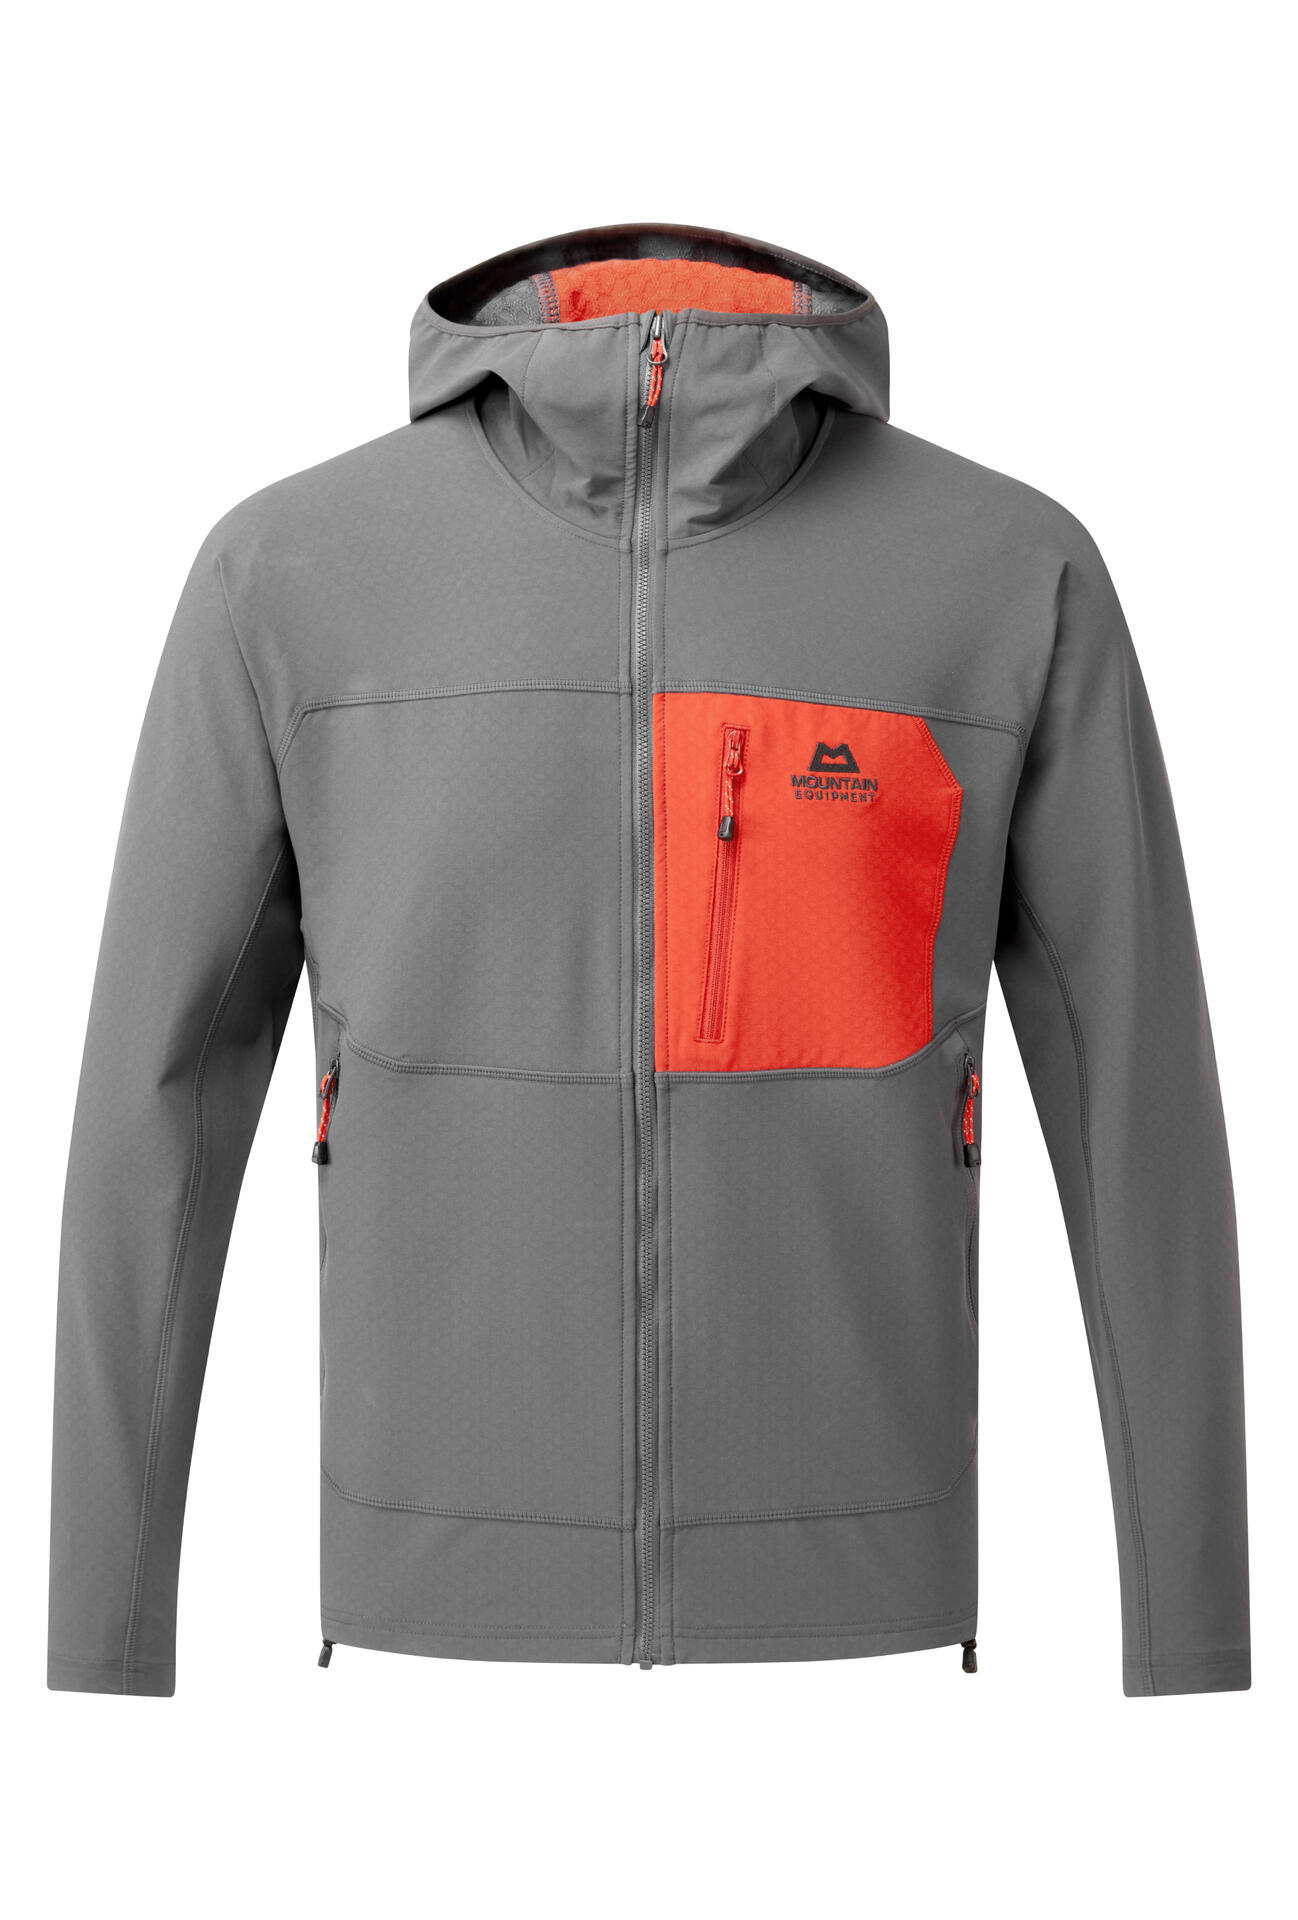 Mountain Equipment Arrow Hooded Jacket Men'S Barva: Anvil Grey/Redrock, Velikost: XL